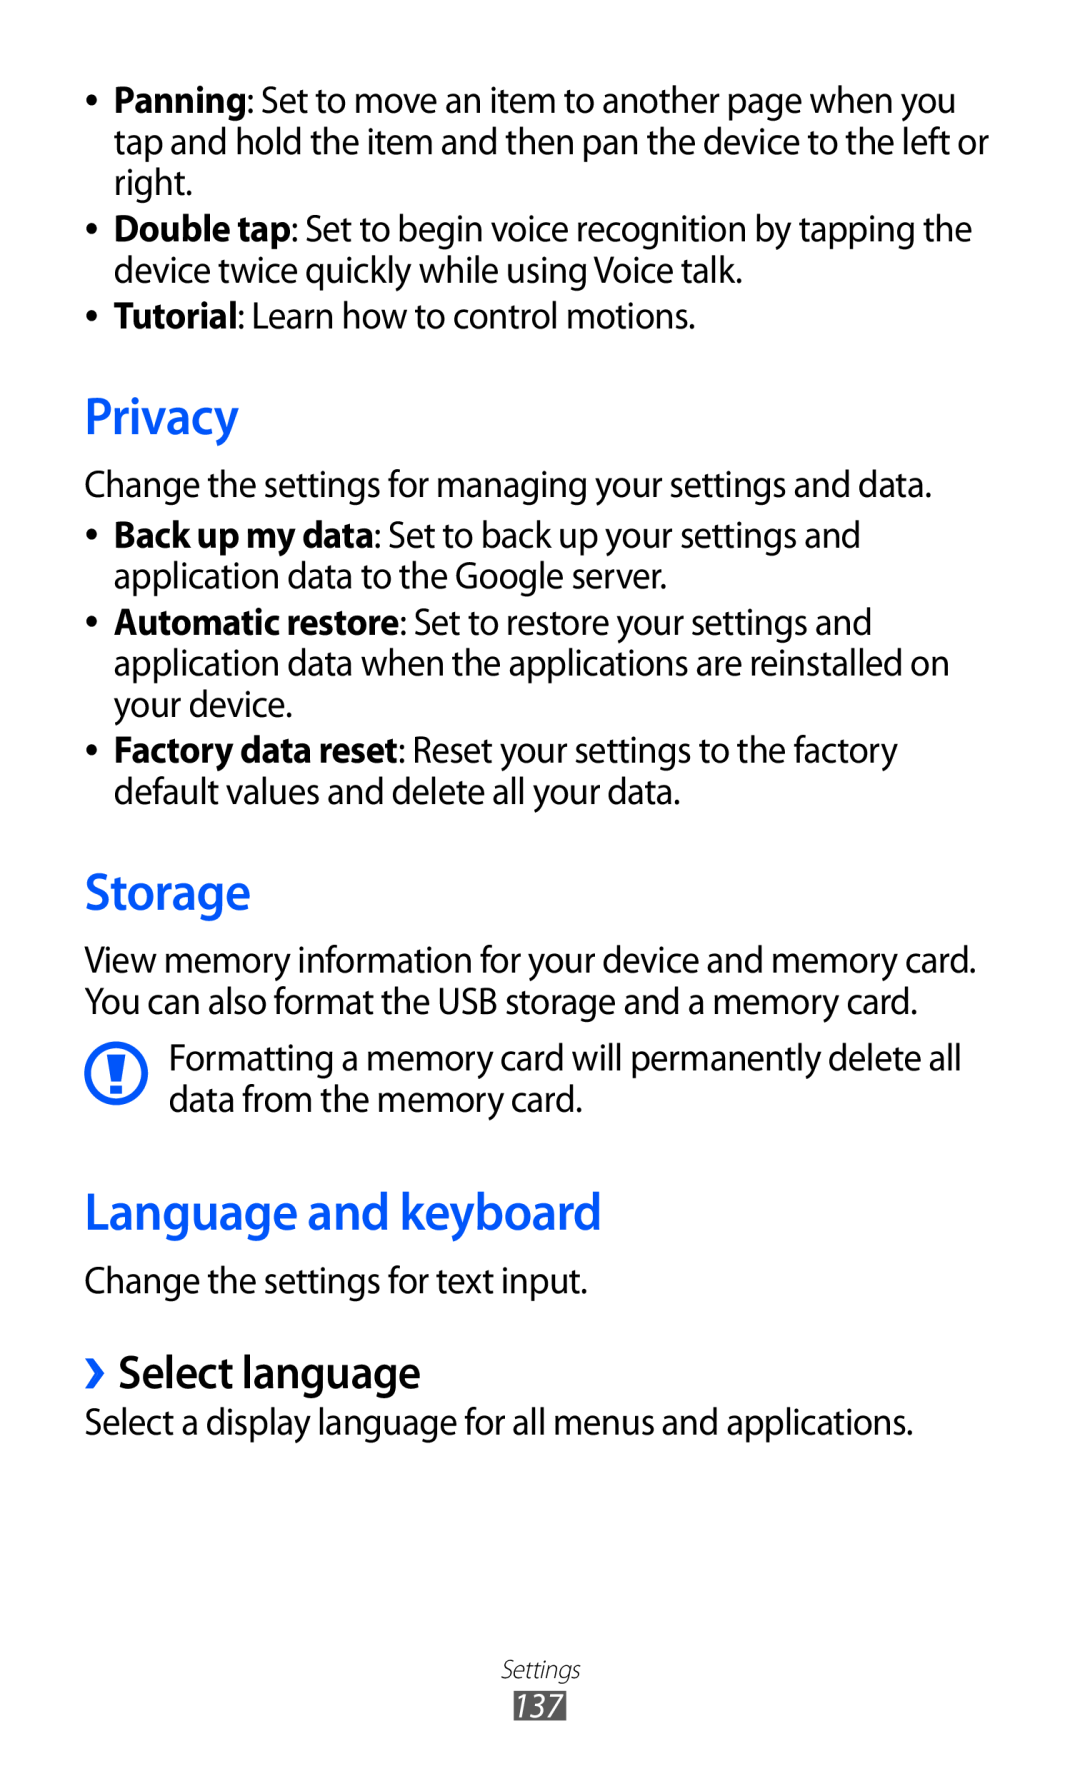 Samsung GT-I9070 user manual Privacy, Storage, Language and keyboard, ››Select language 